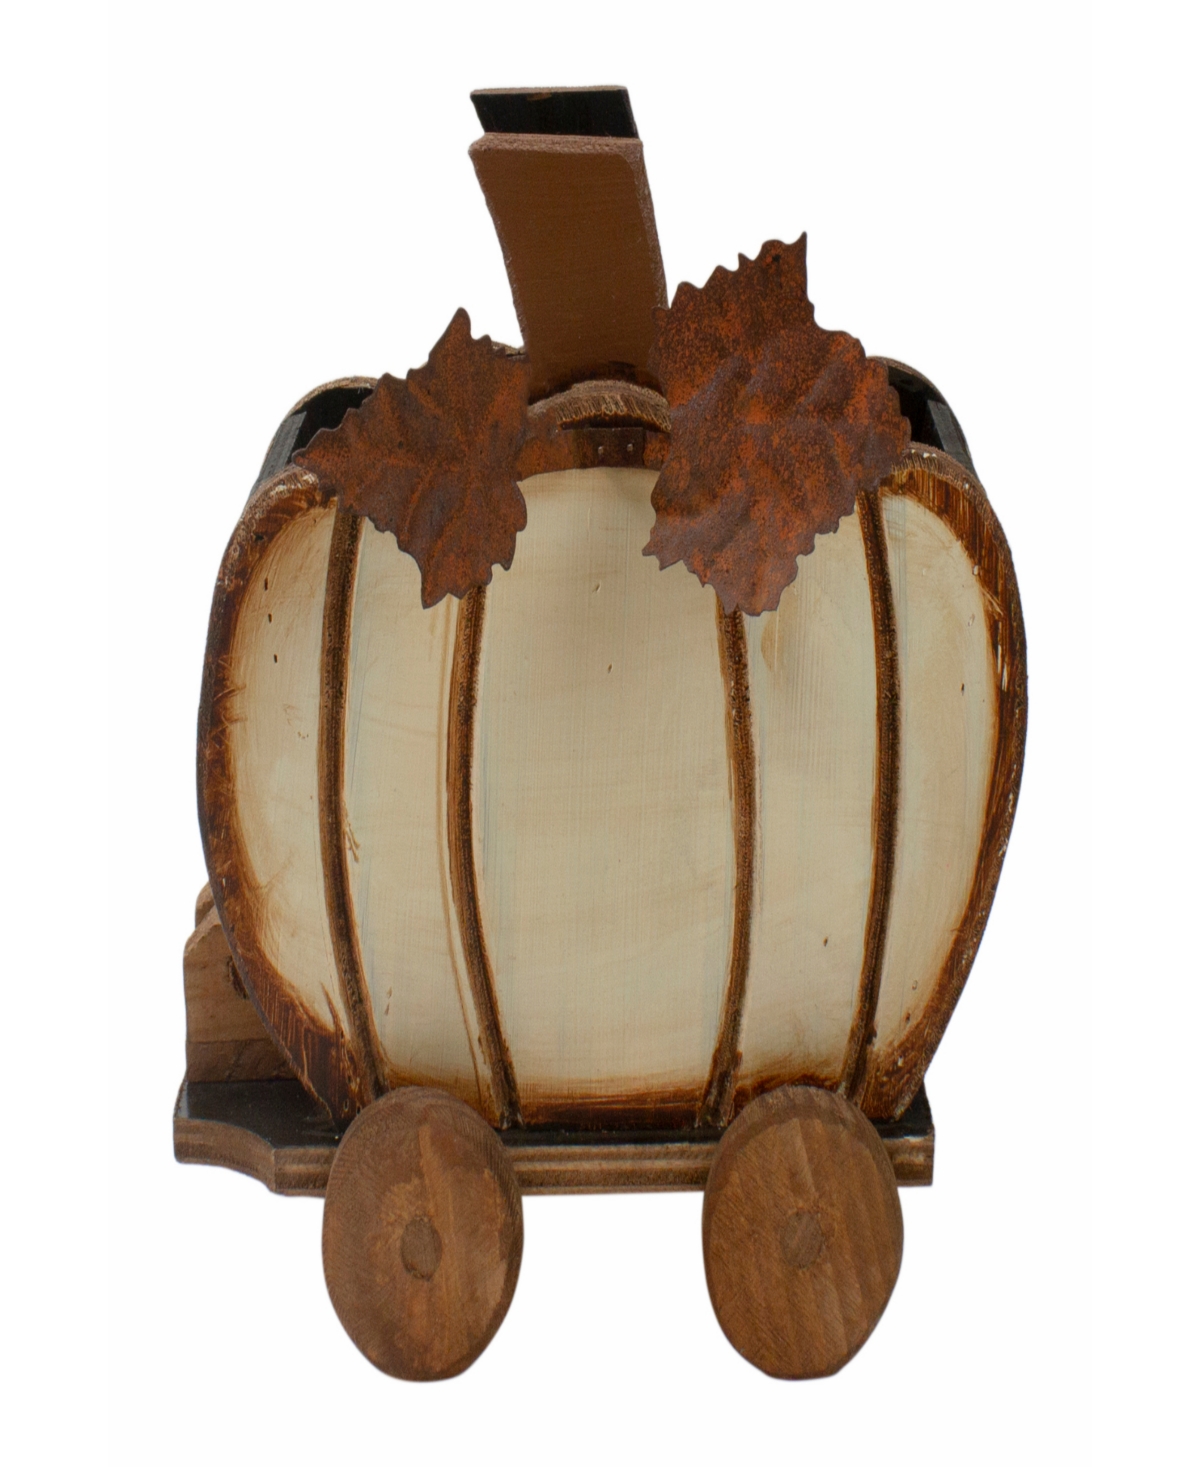 Northlight 10.5" Fall Harvest Wooden Pumpkin Cart Tabletop Decoration In Brown